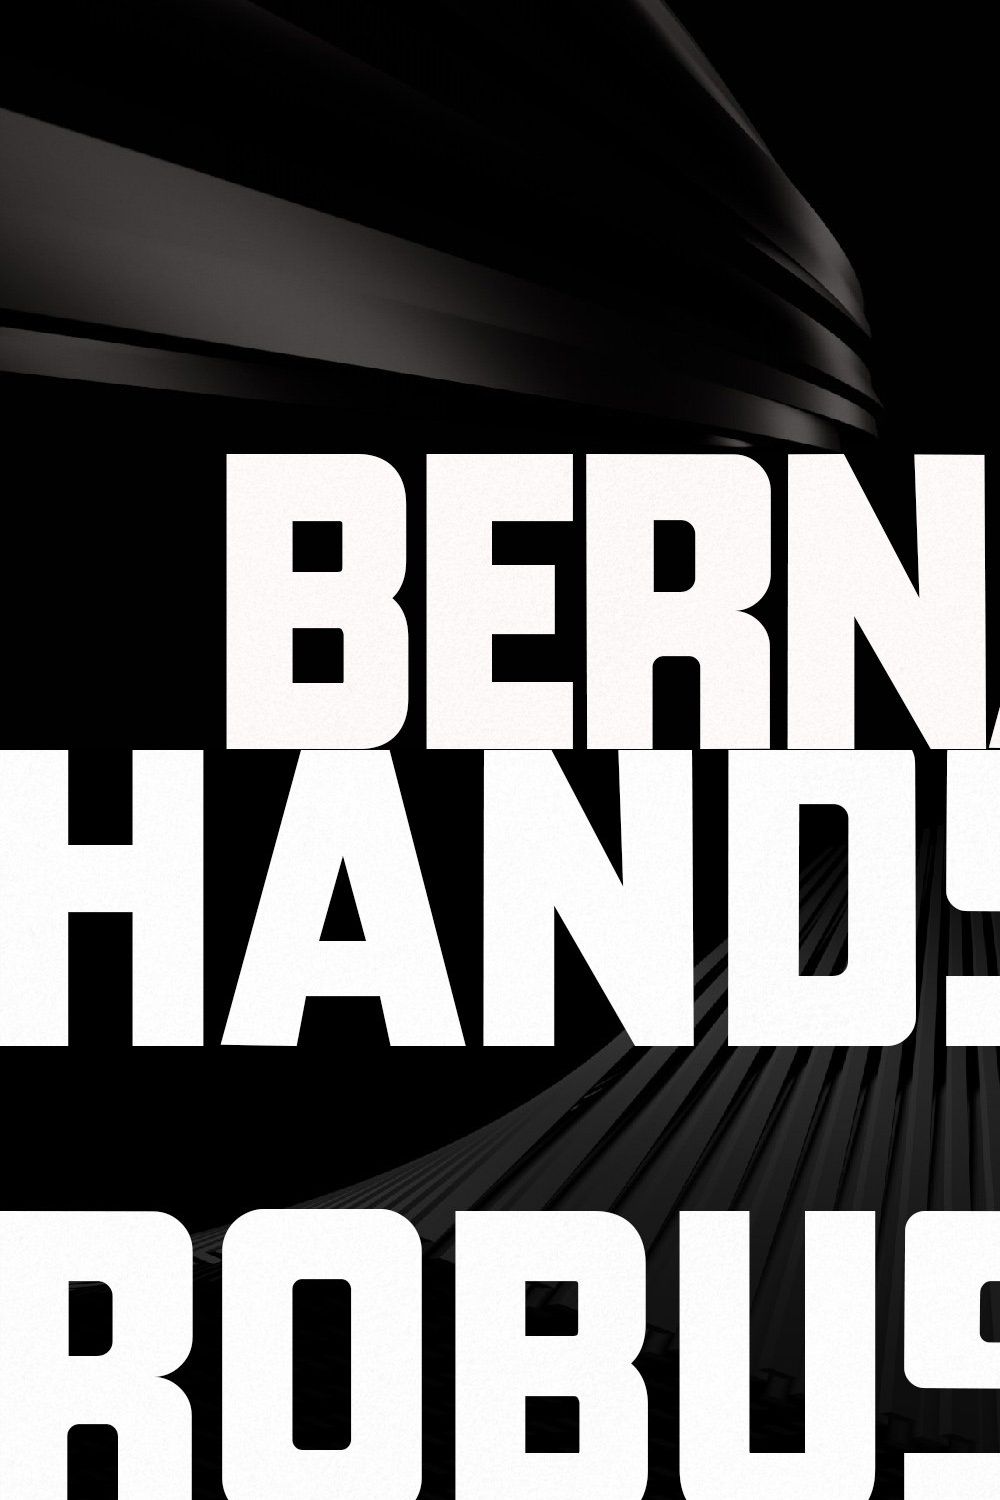 Bernard - Industrial Typeface pinterest preview image.